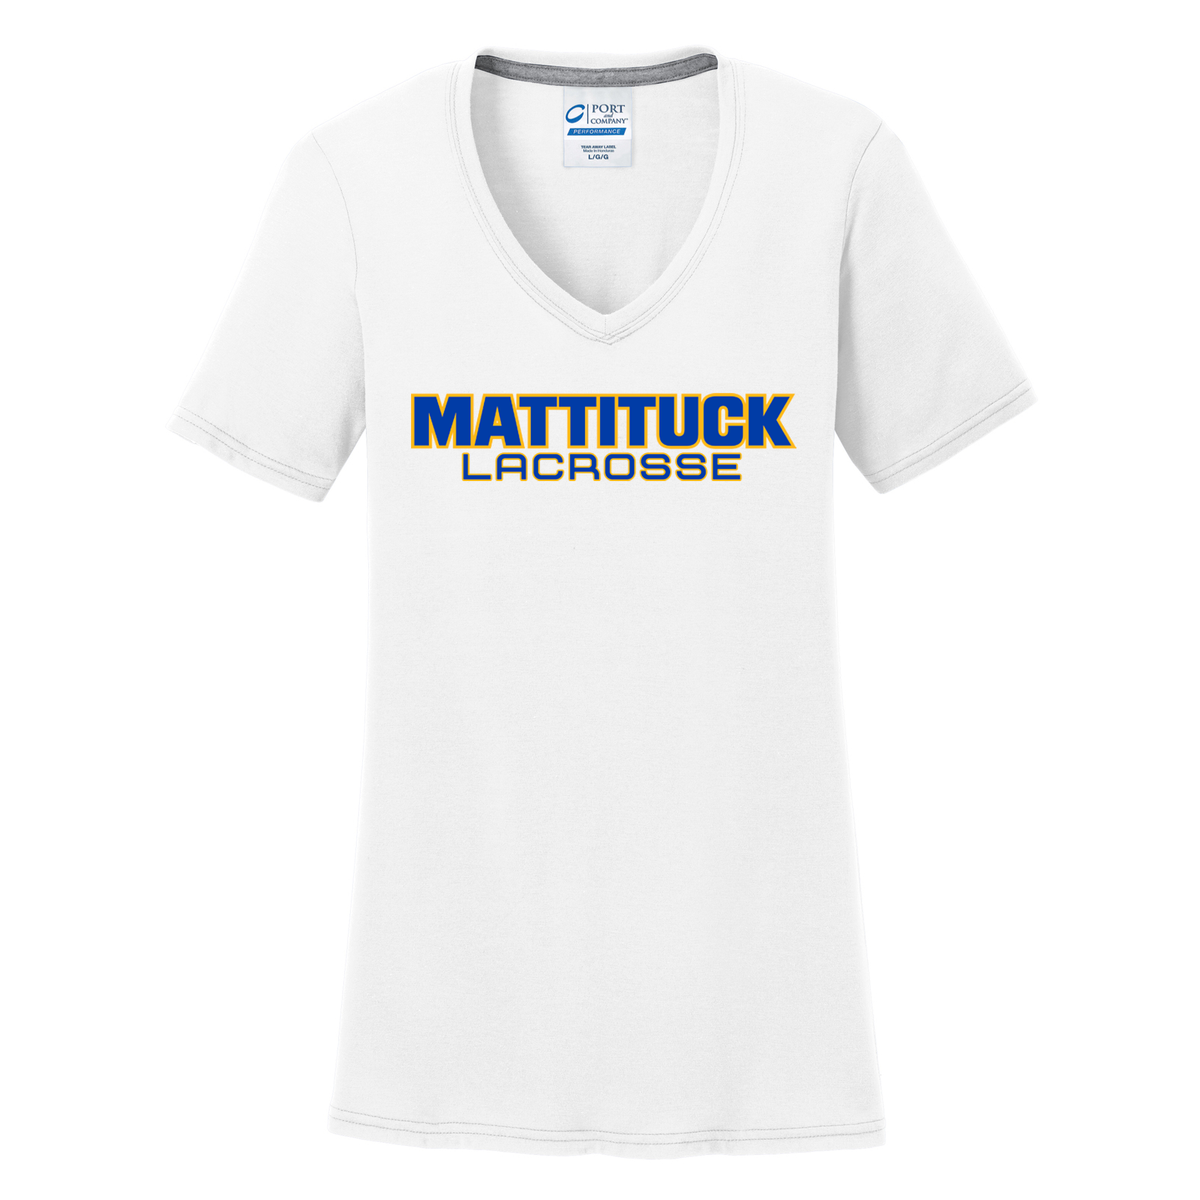 Mattituck Lacrosse Women's  T-Shirt